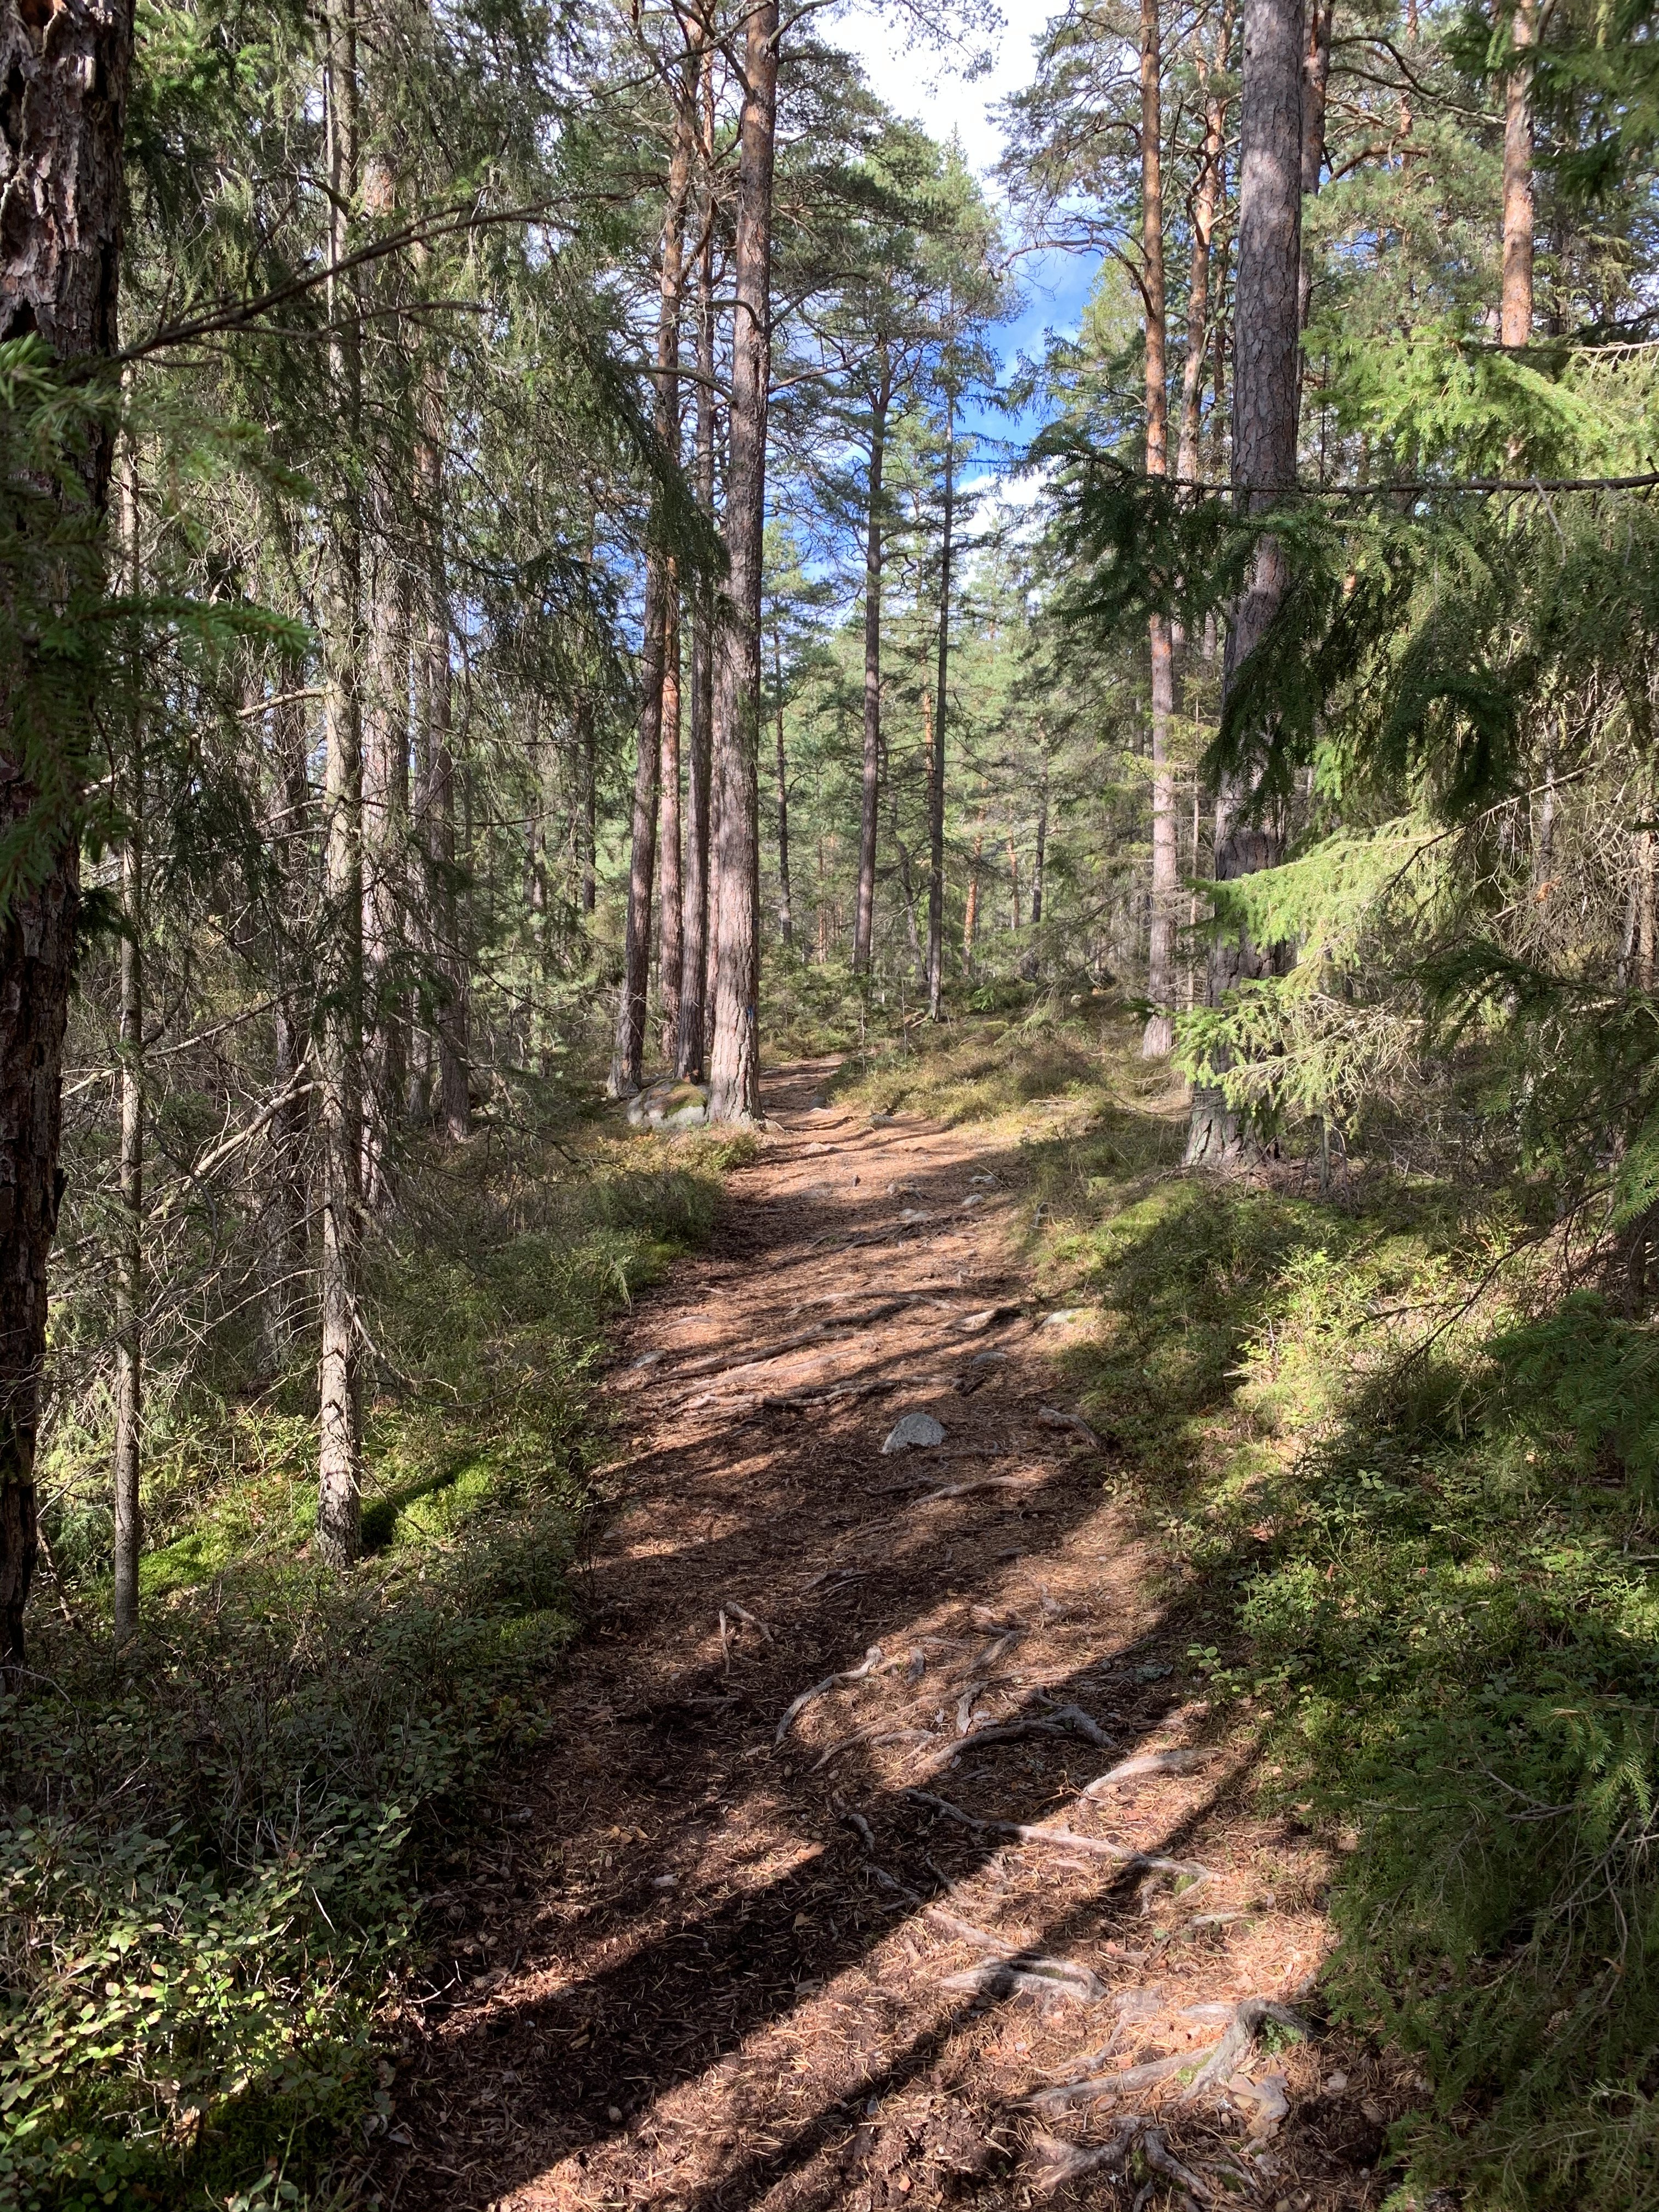 The Adelsöleden hiking trail passes through the reserve.